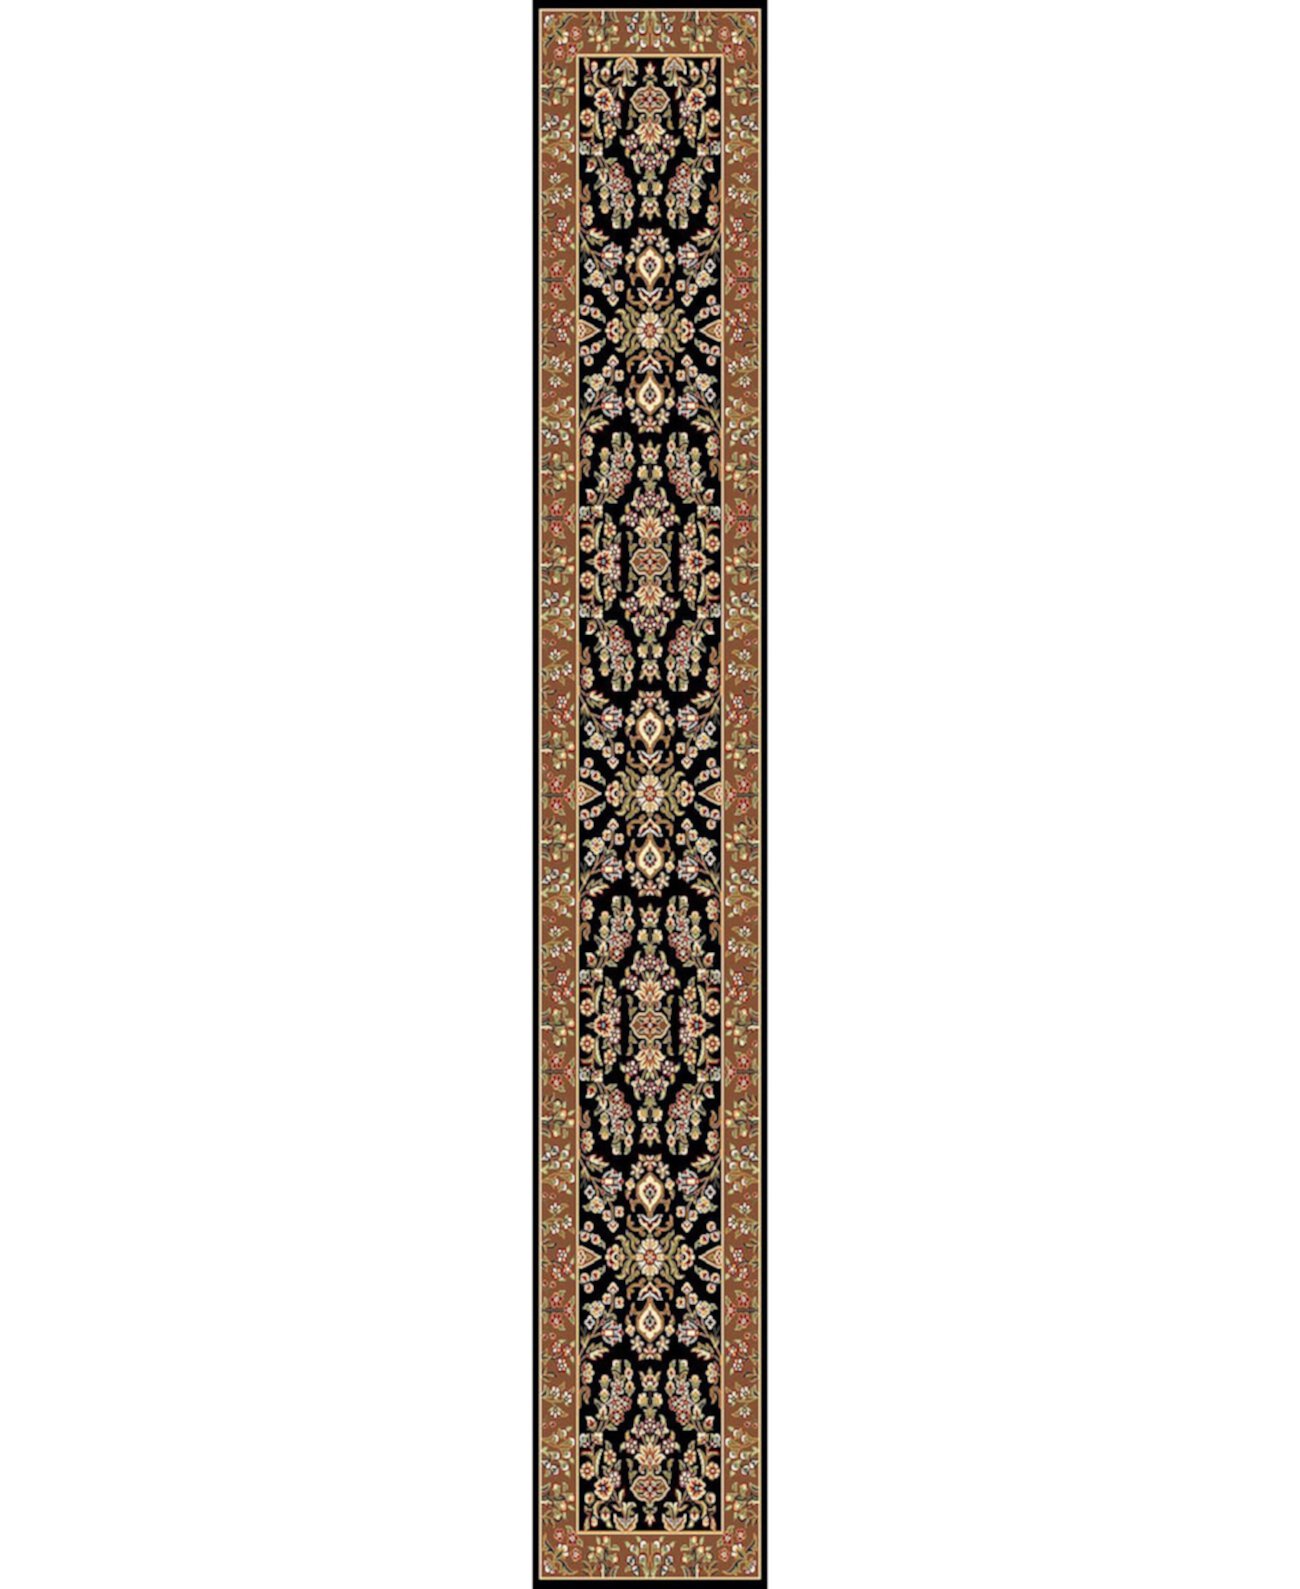 Lyndhurst LNH331 Черно-коричневый коврик для беговой дорожки размером 2 фута 3 x 14 футов Safavieh